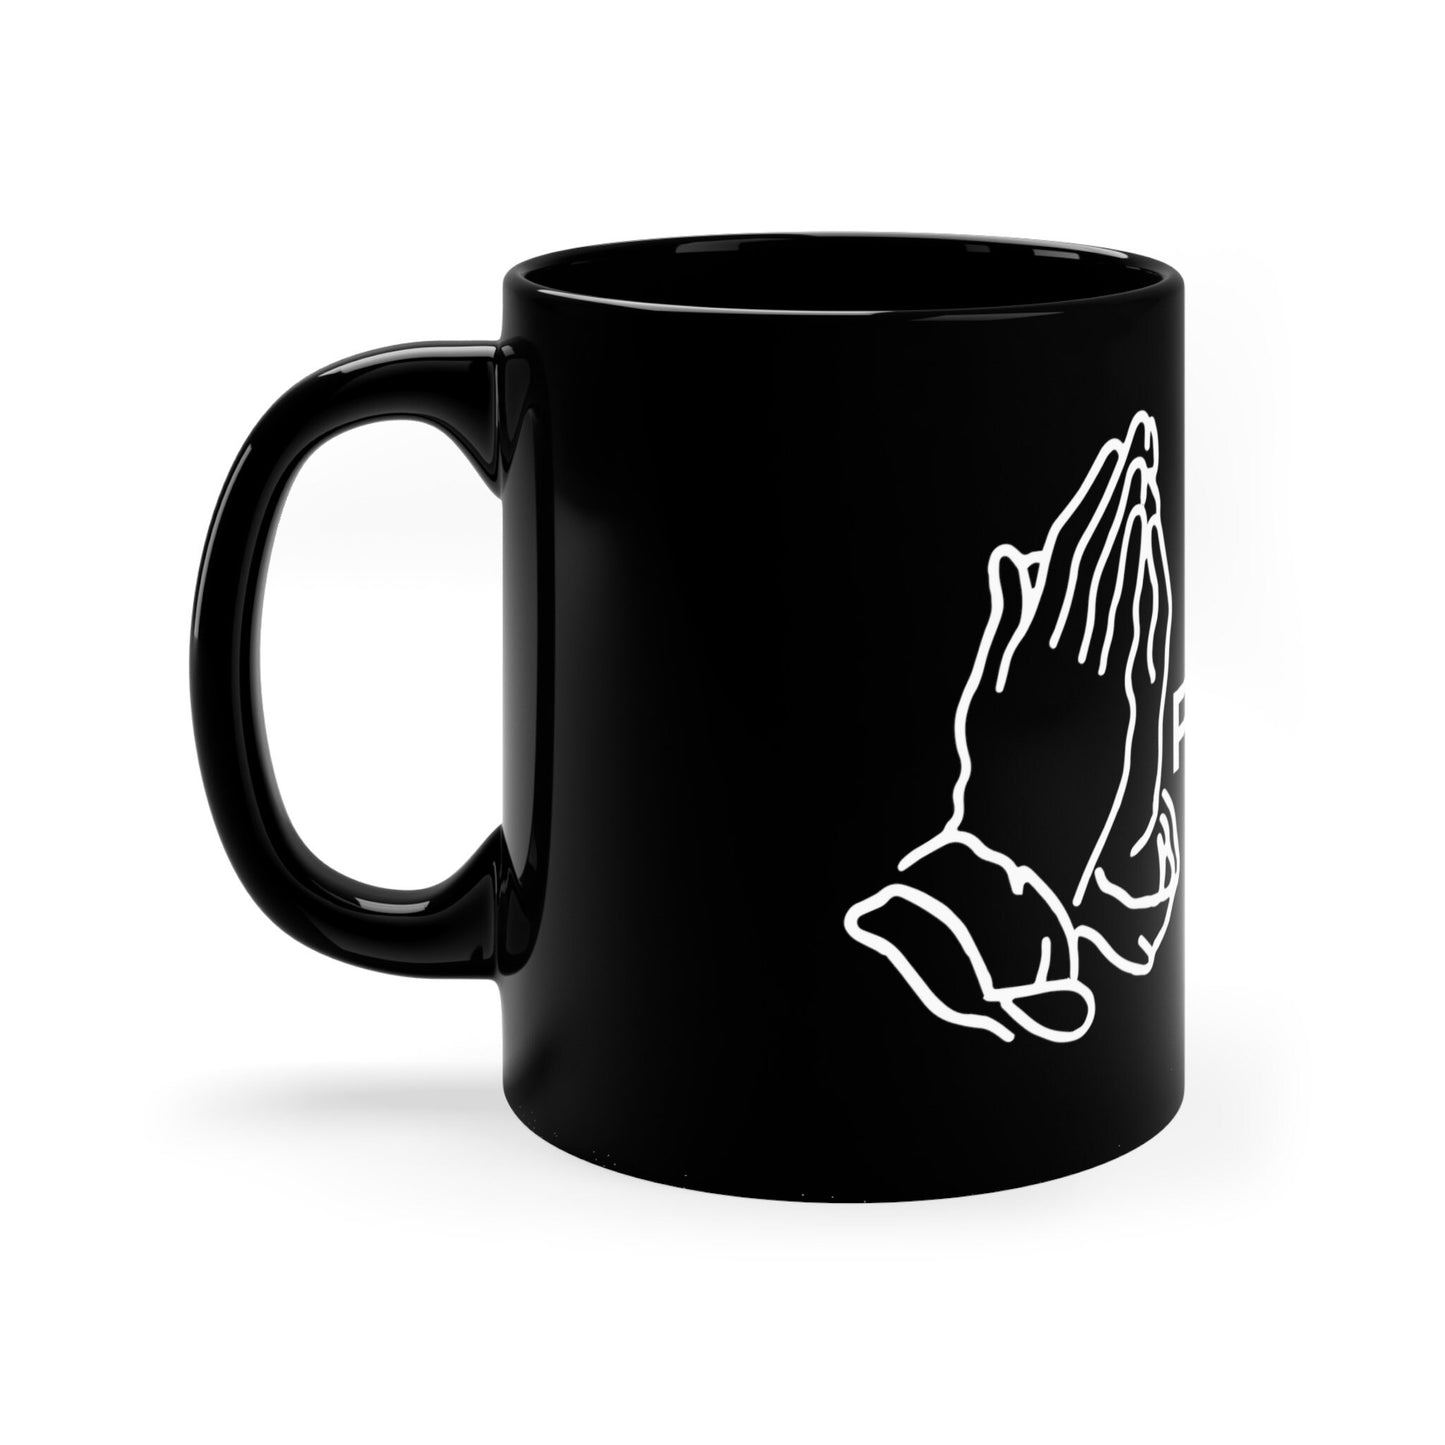 Pray for Revival Mug by Revival 11oz Black Coffee and Mug, Tea cup, Gift for Men, Gift for Women